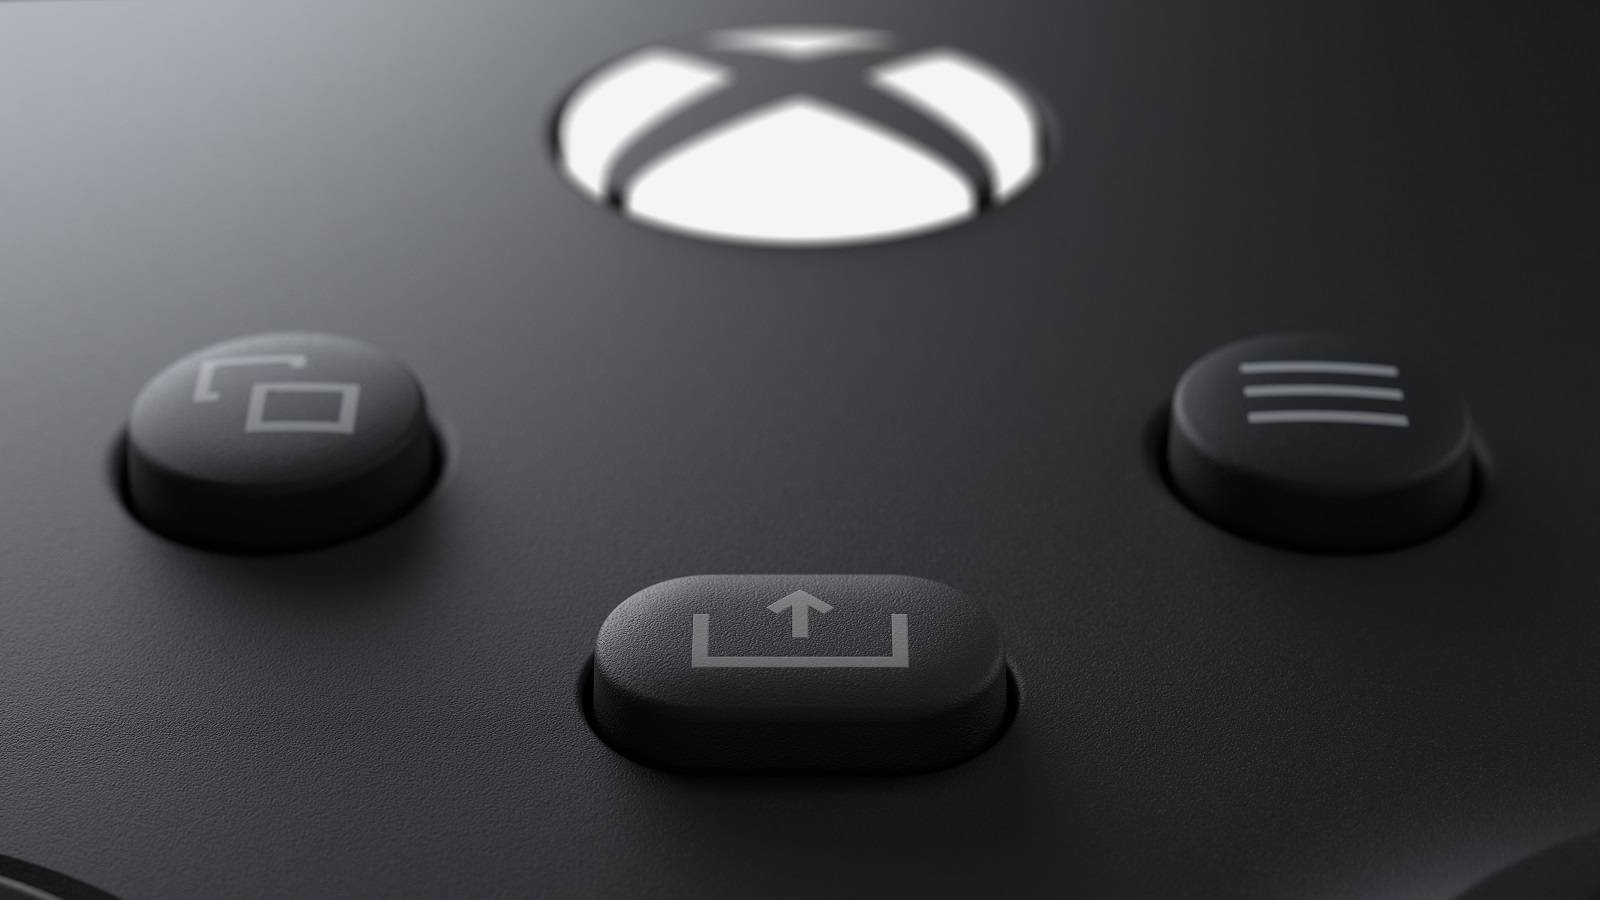 Xbox-Series-X-Controller